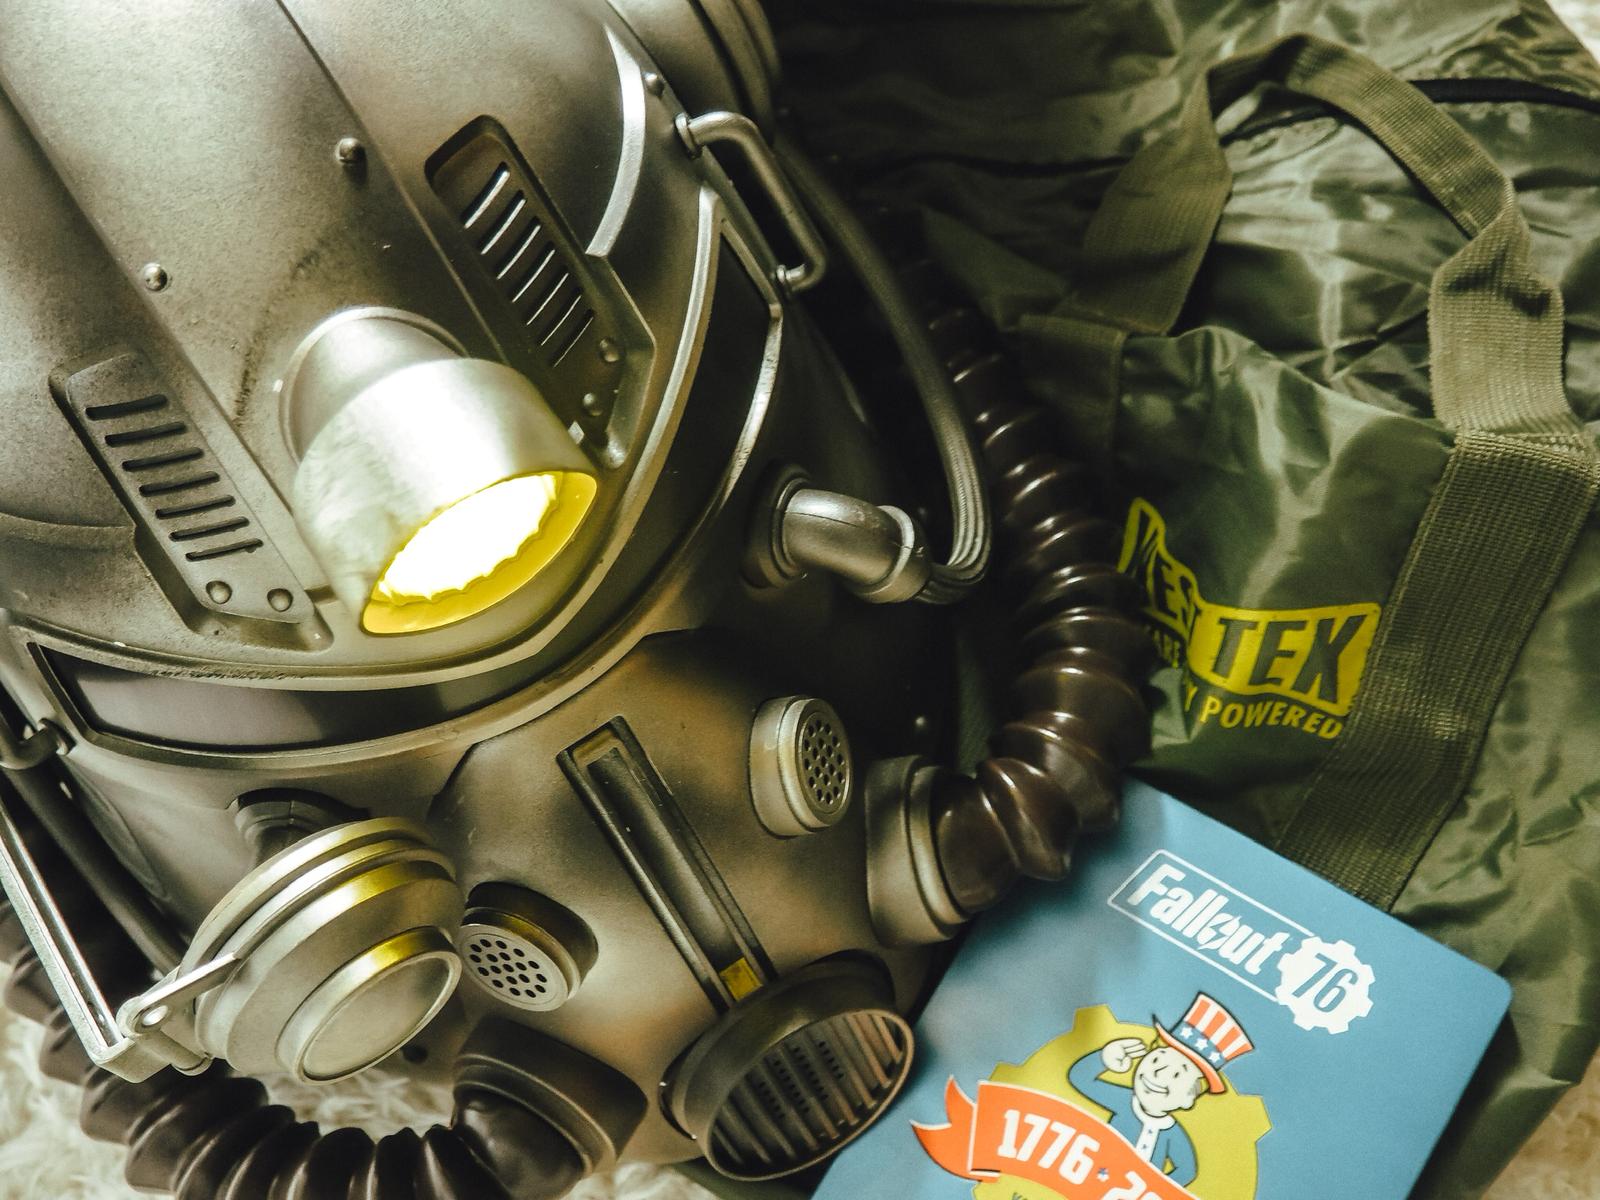 Helm aus der Fallout 76 Power Armor Edition